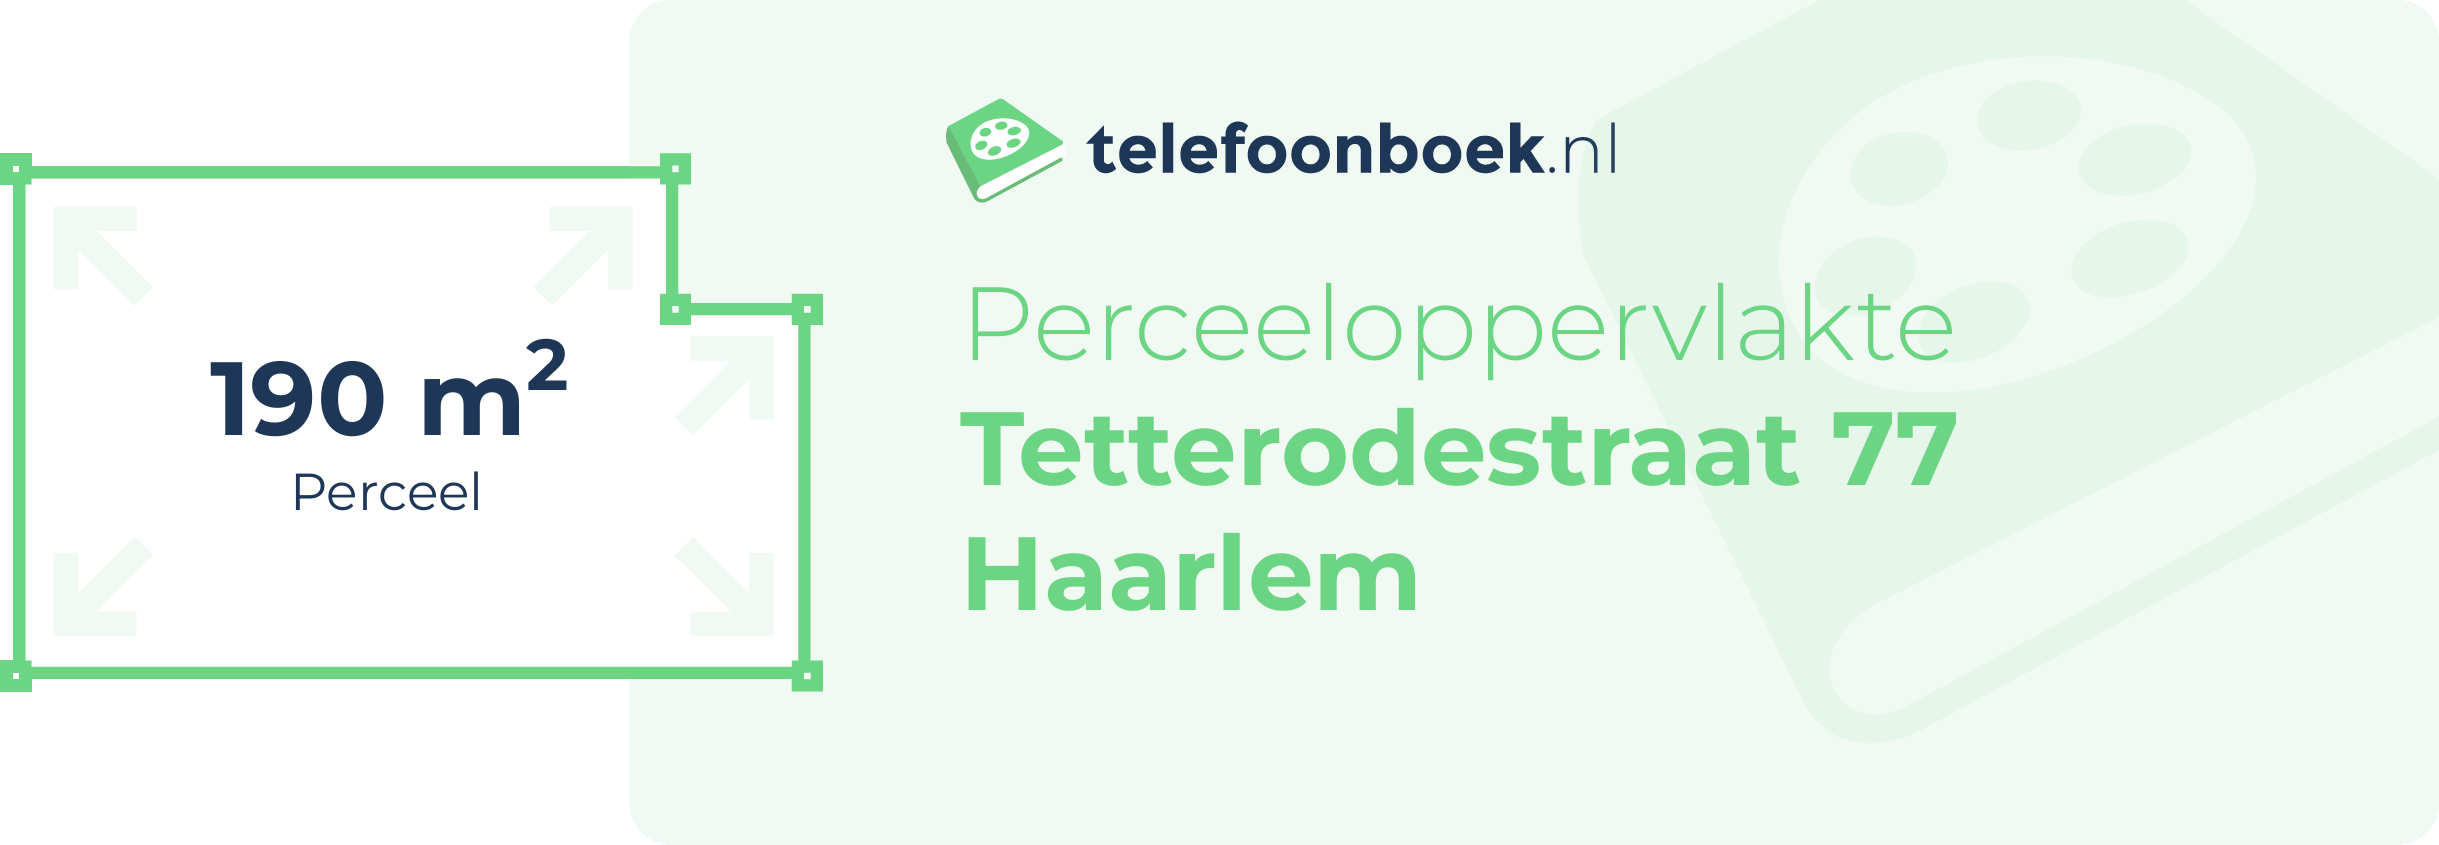 Perceeloppervlakte Tetterodestraat 77 Haarlem